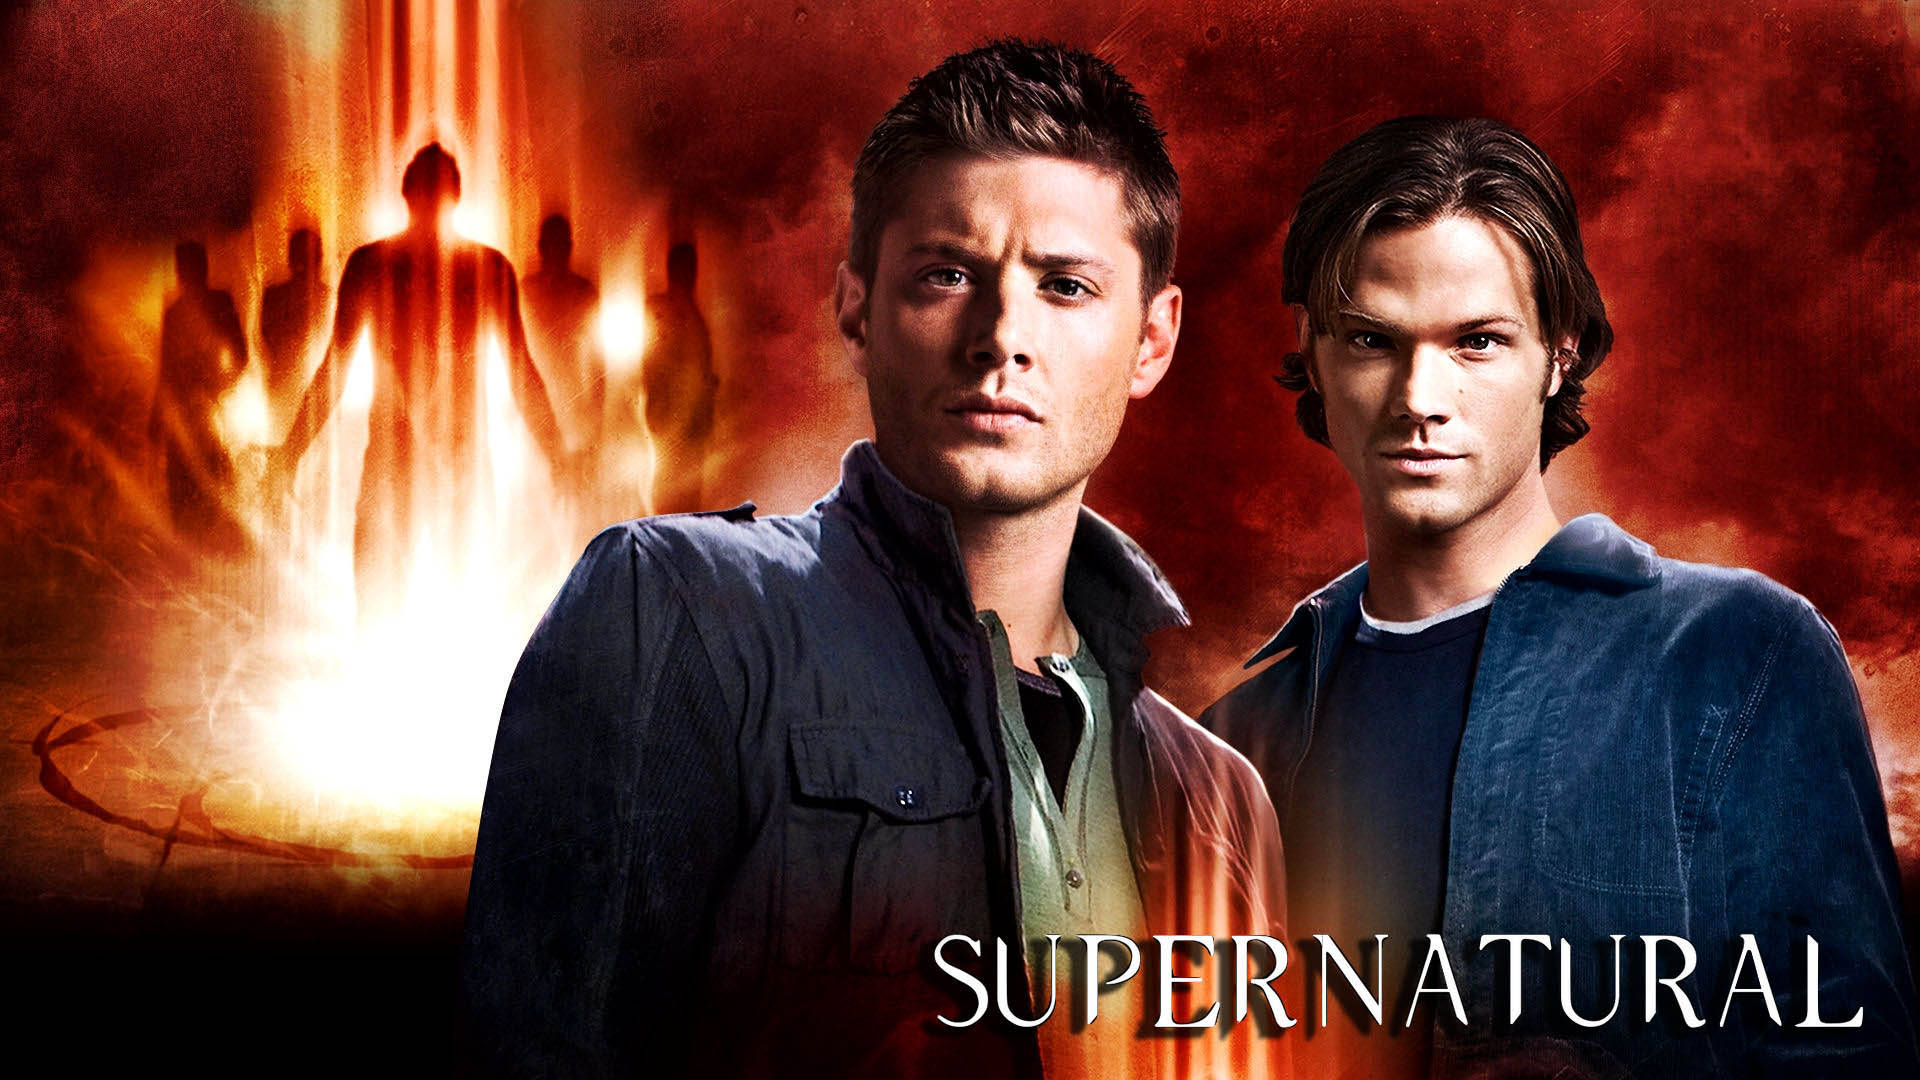 Supernatural Season 5 (2009)